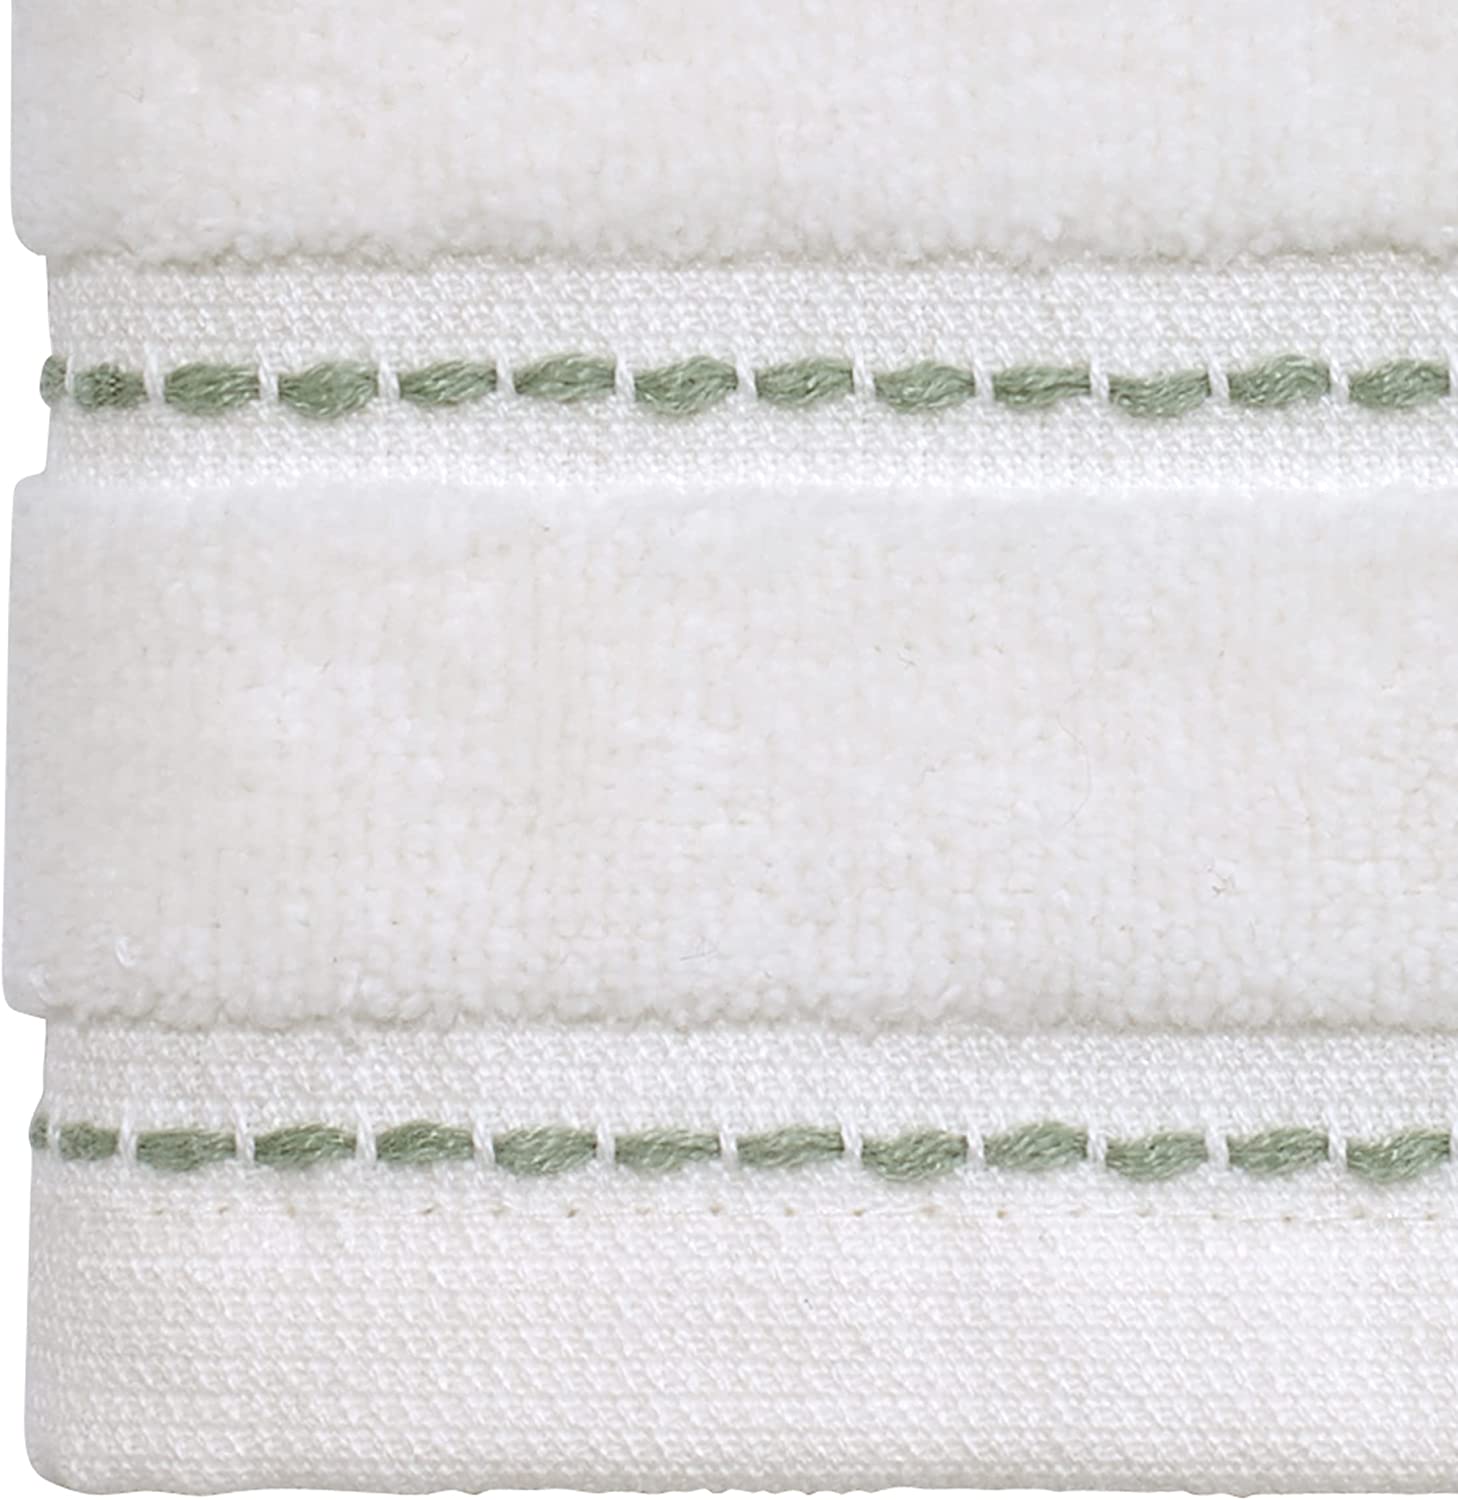 Avanti Spring Garden Fingertip Towel - image 2 of 5